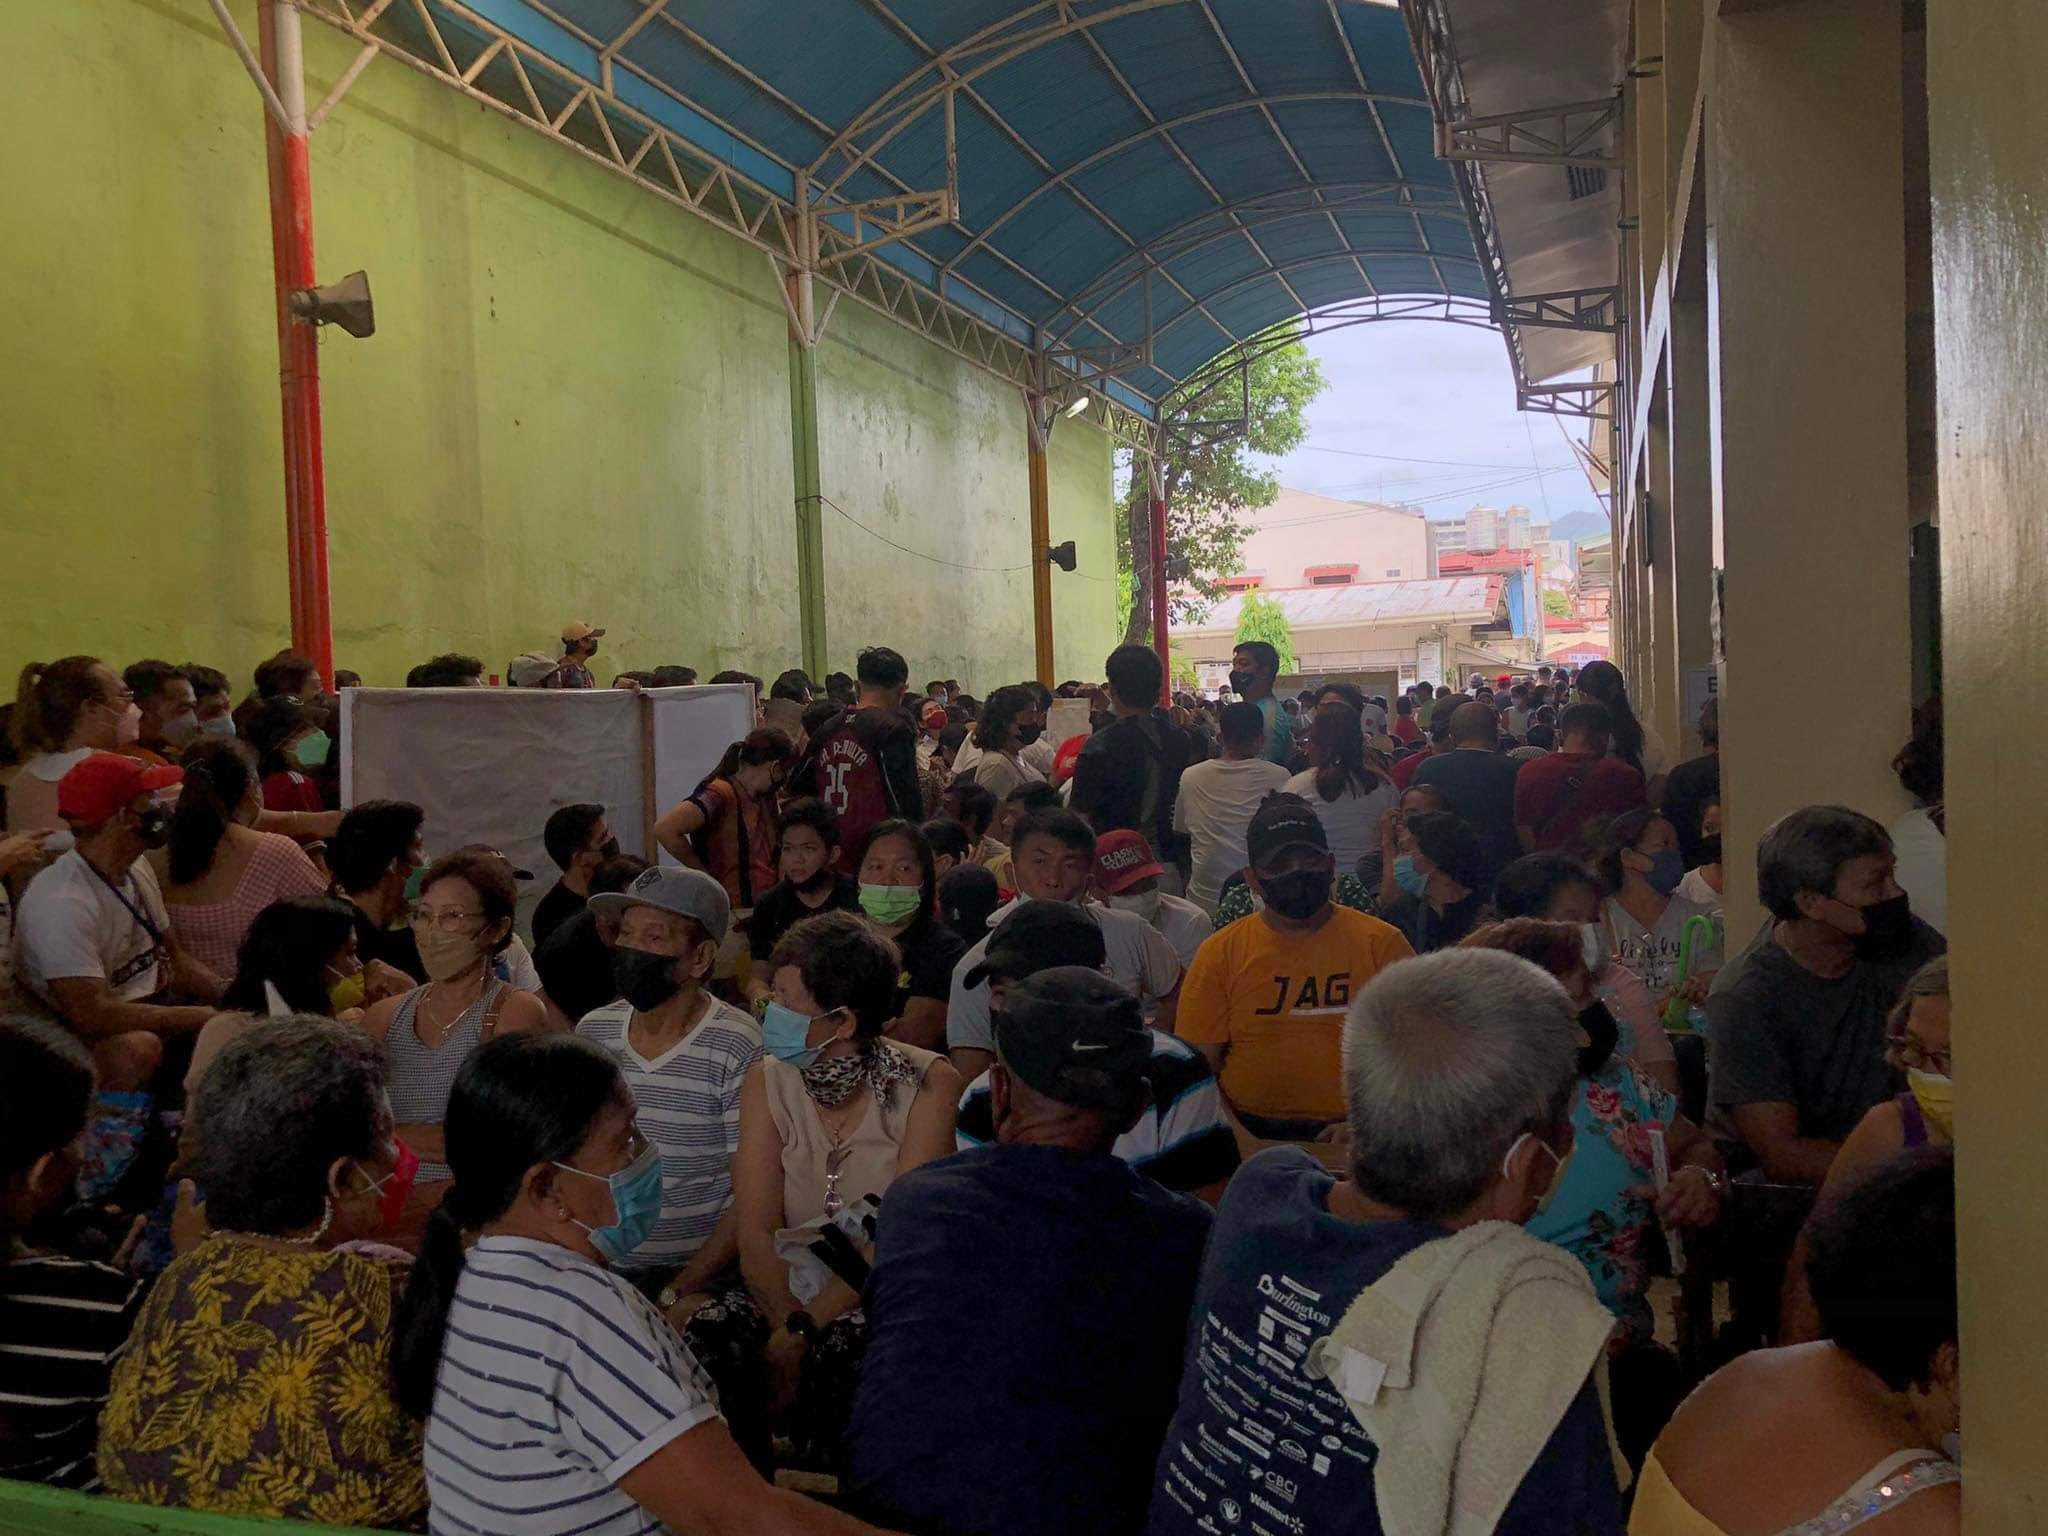 IN PHOTOS: Long lines, overcrowding in Mandaue polling precincts